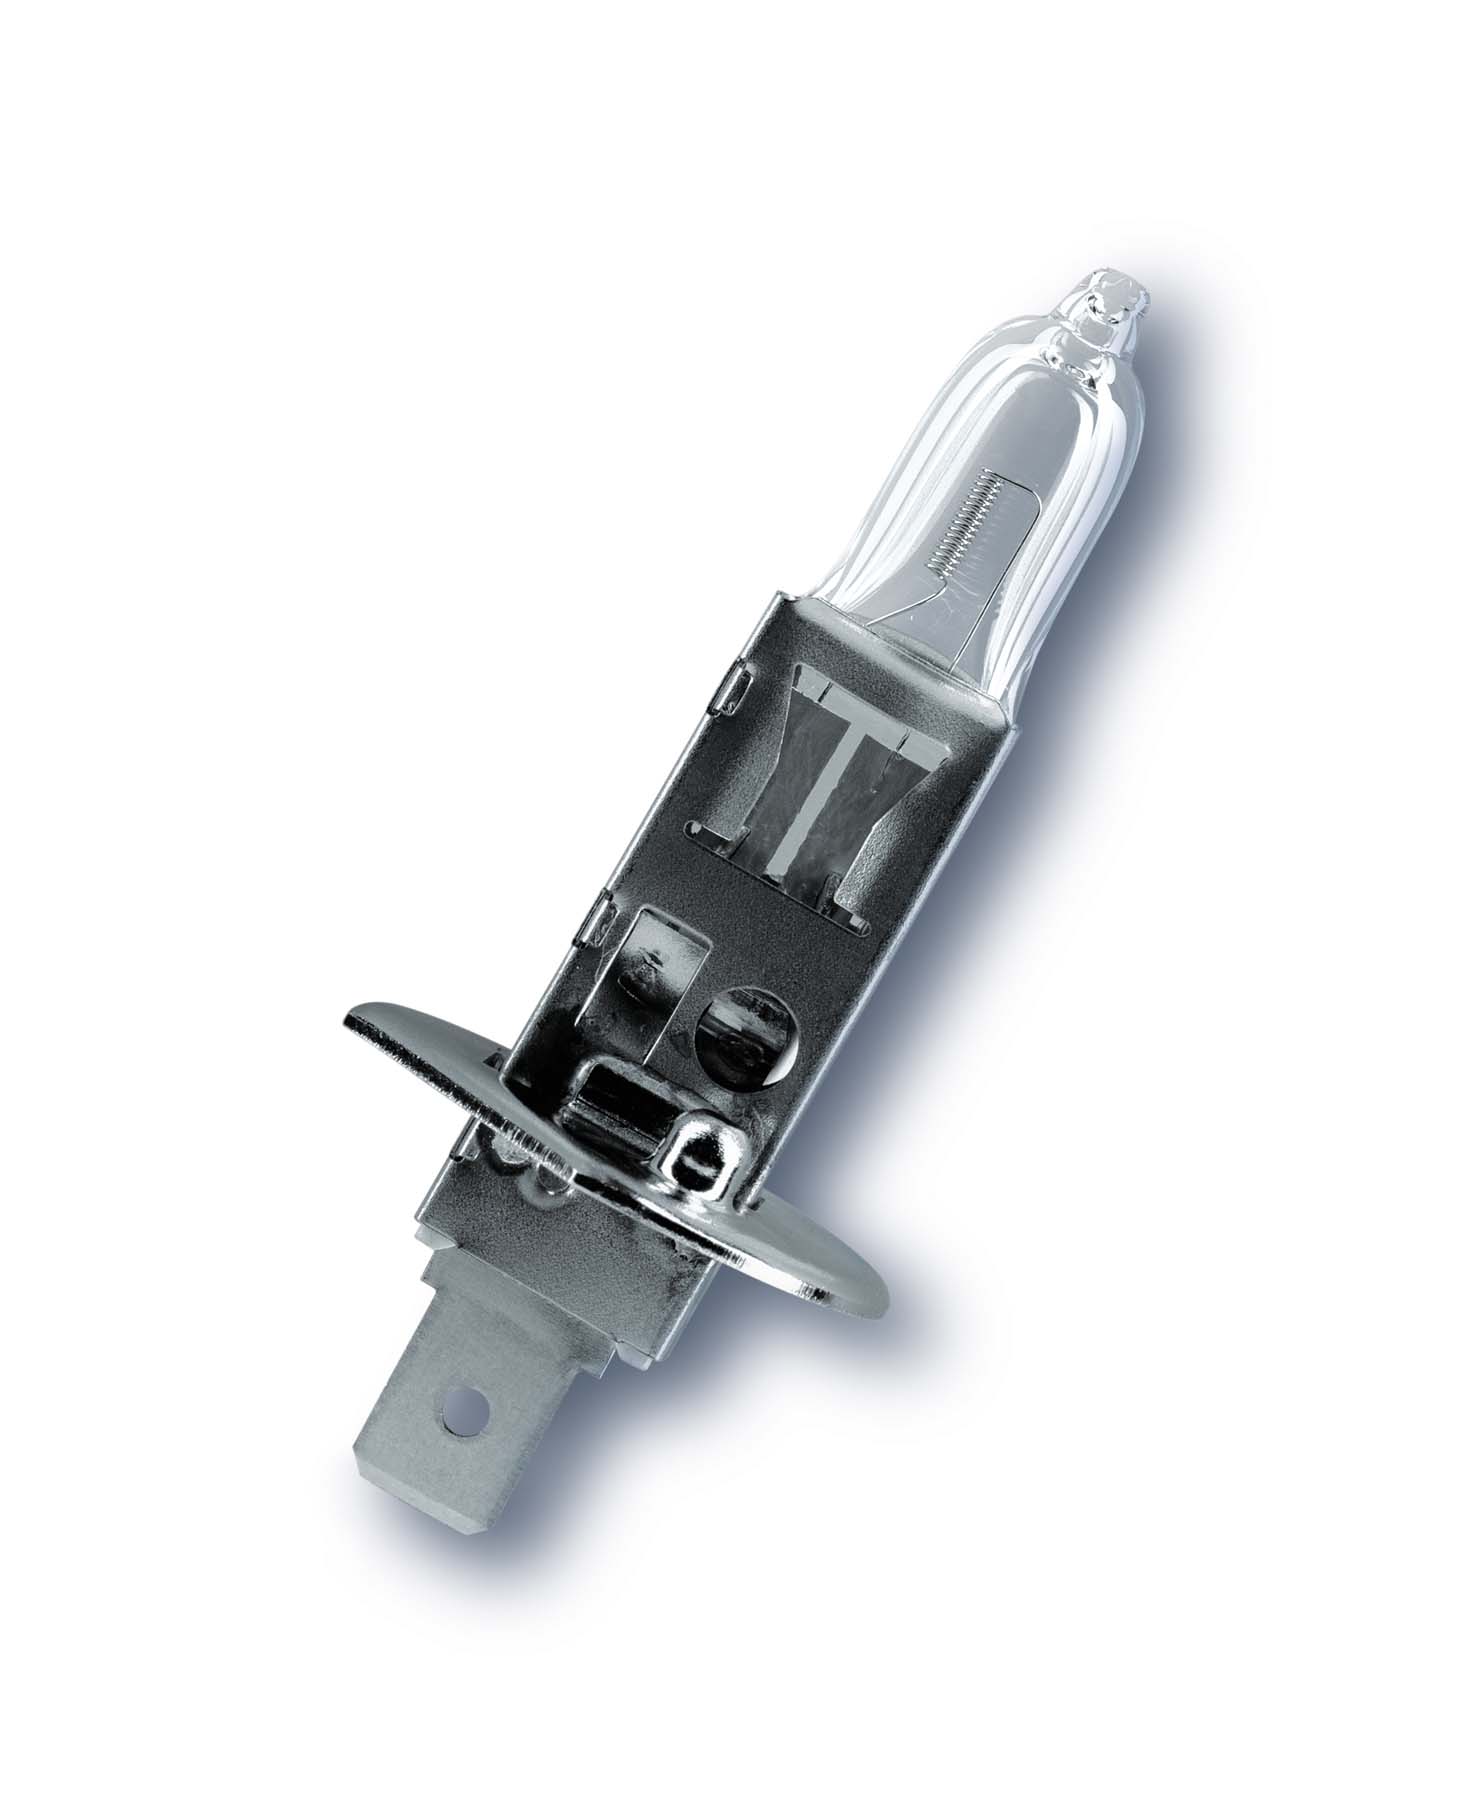 Ampoule H1 Ultra Life 55W [12V] (2 pièces), 12 V OSRAM, par ex. pour Ford, Opel, Vauxhall, KIA, Renault, Hyundai